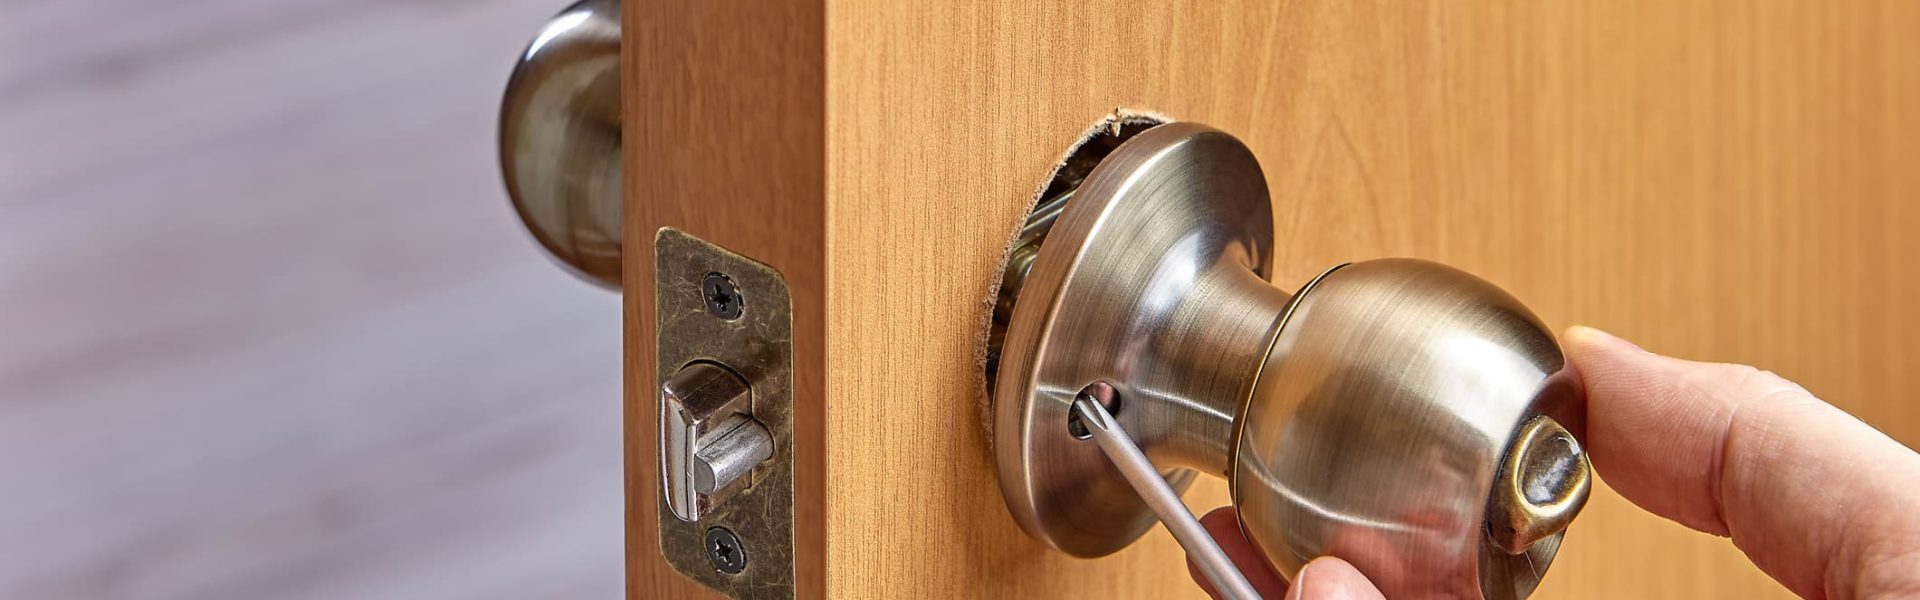 Professional Home Lock Change in Chula Vista, CA